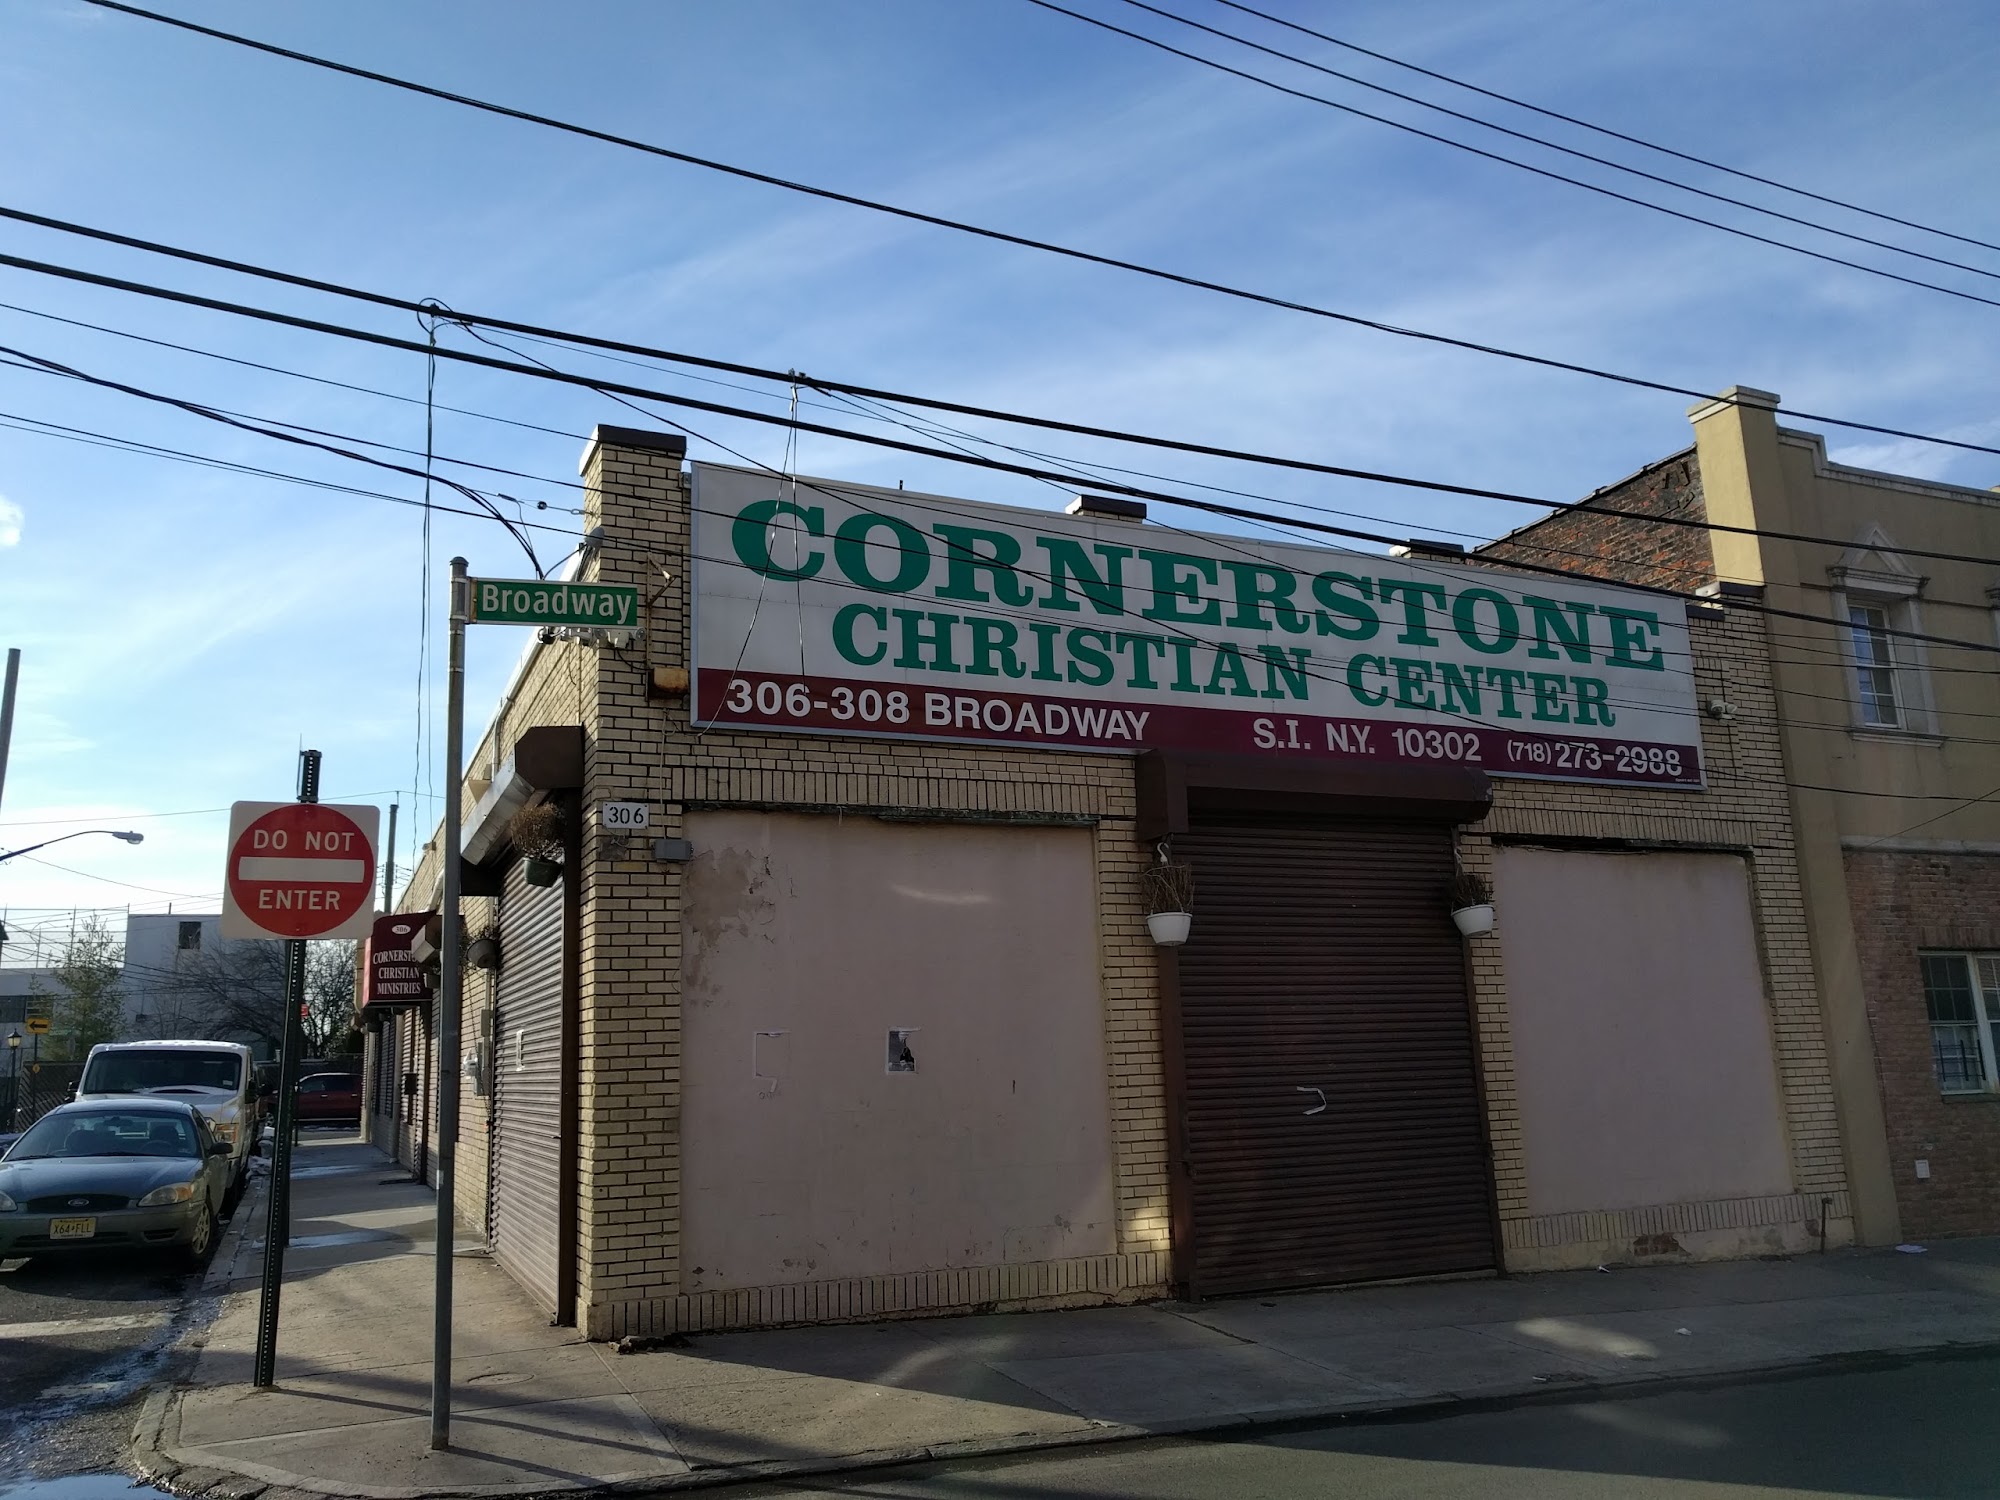 Cornerstone Christian Ministries